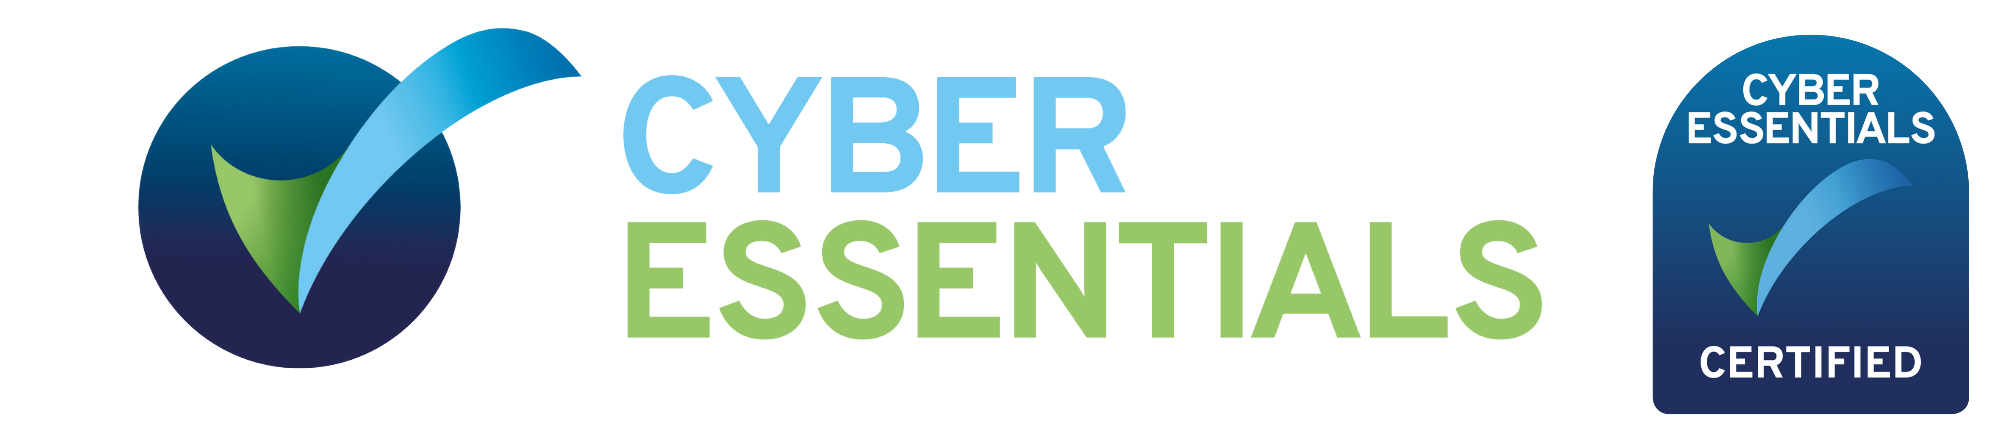 cyber essentials-transparent-2